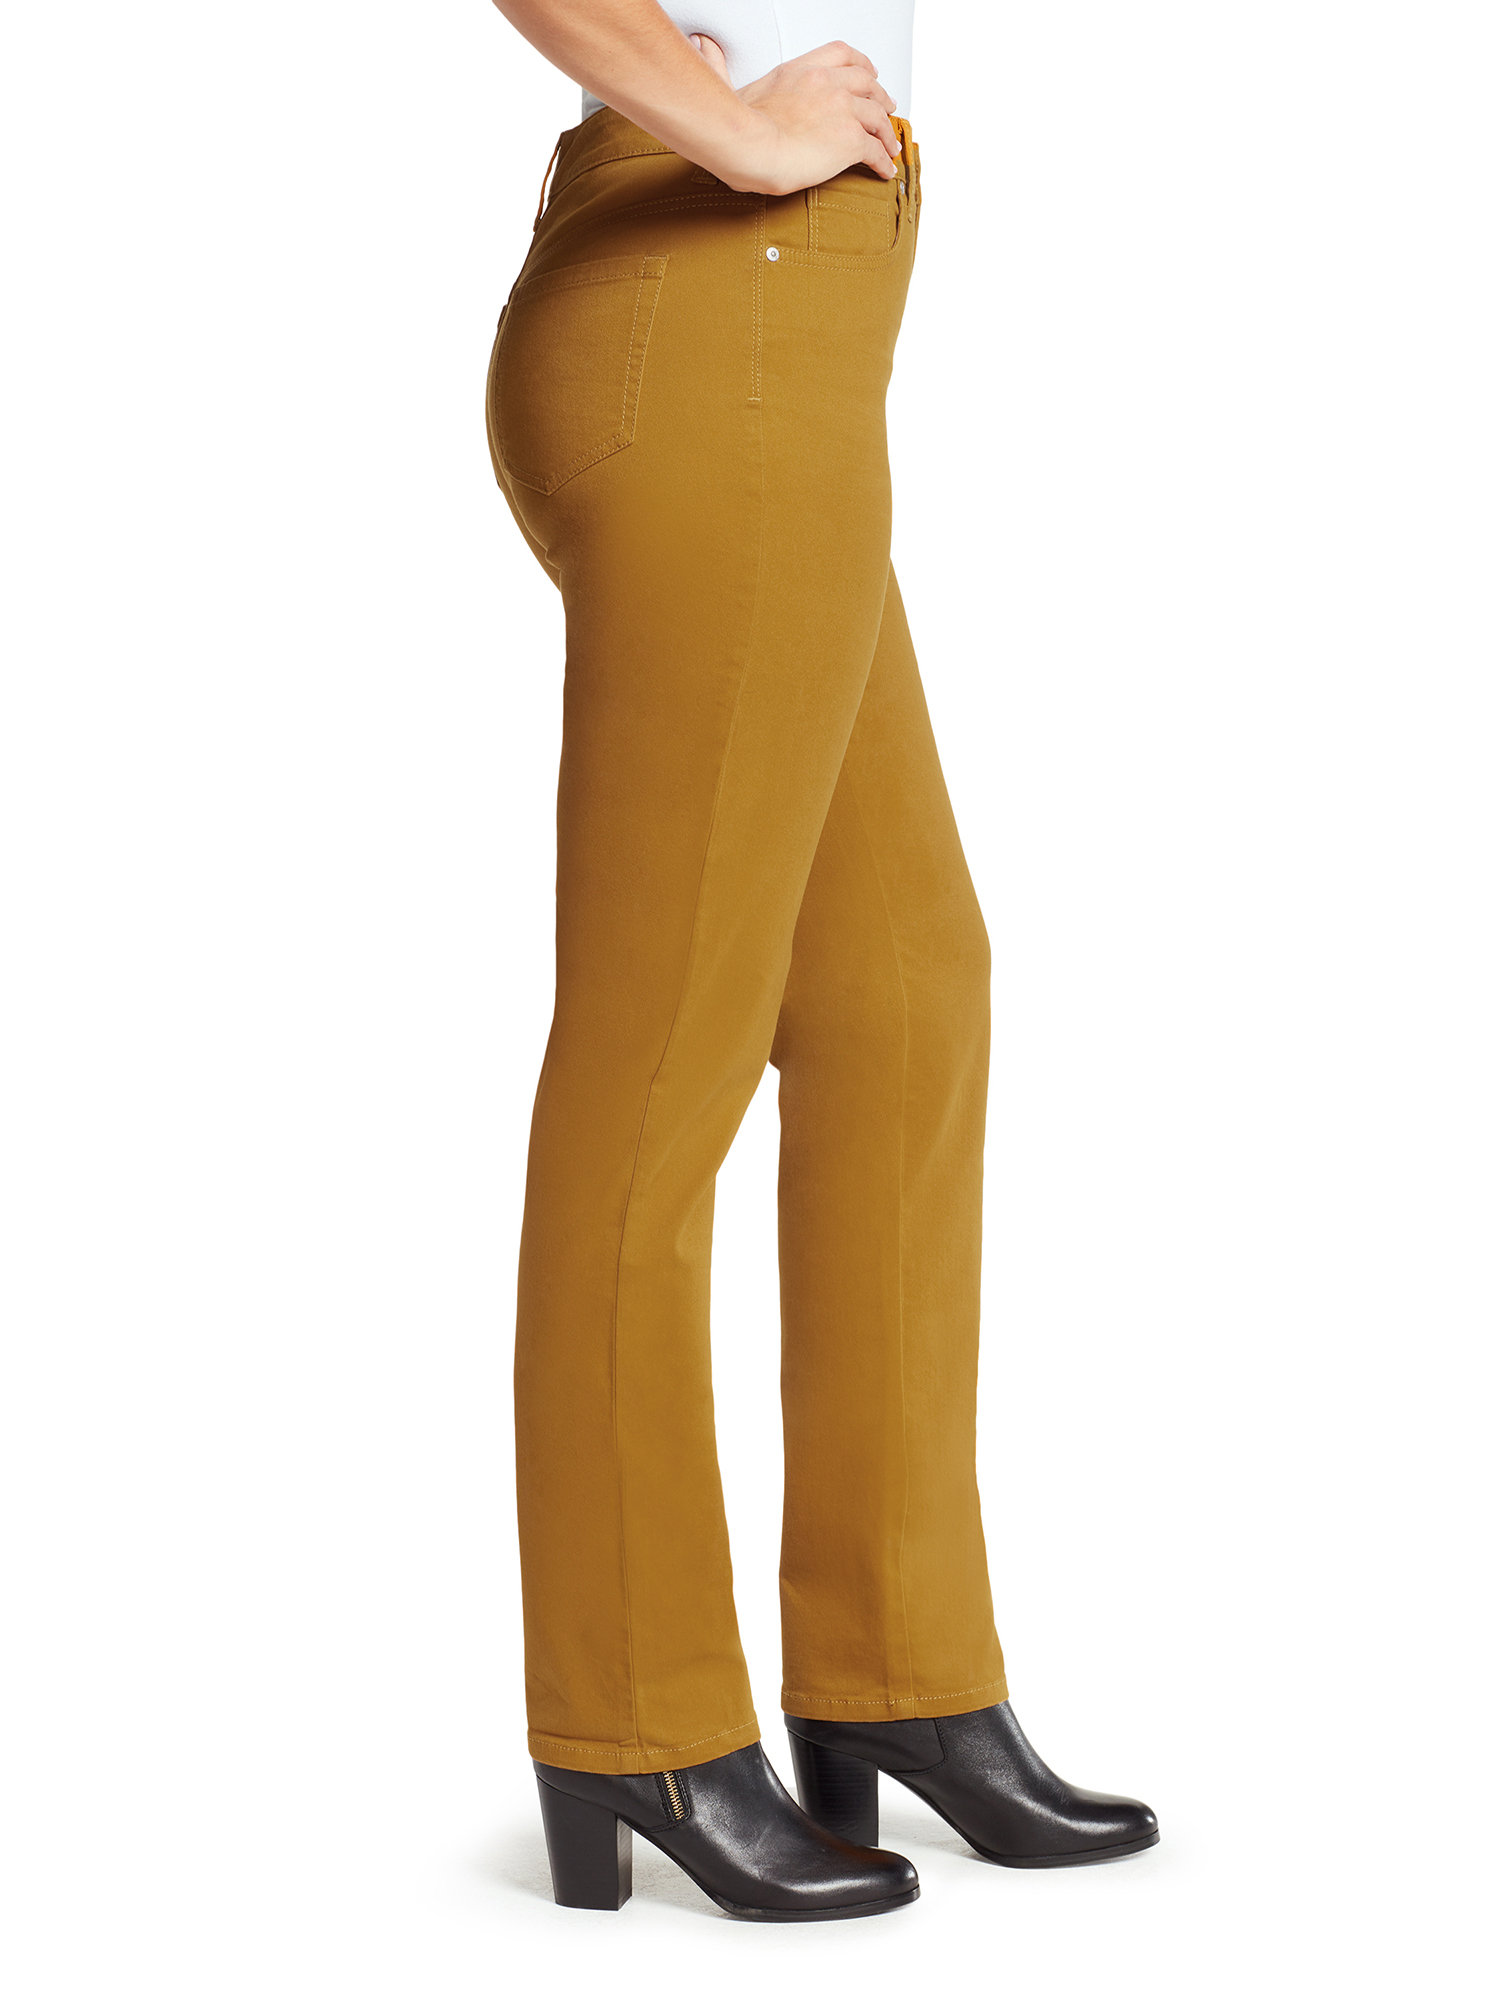 Gloria Vanderbilt Women's Amanda High Rise Straight Leg 5 Pocket Jean - image 2 of 4